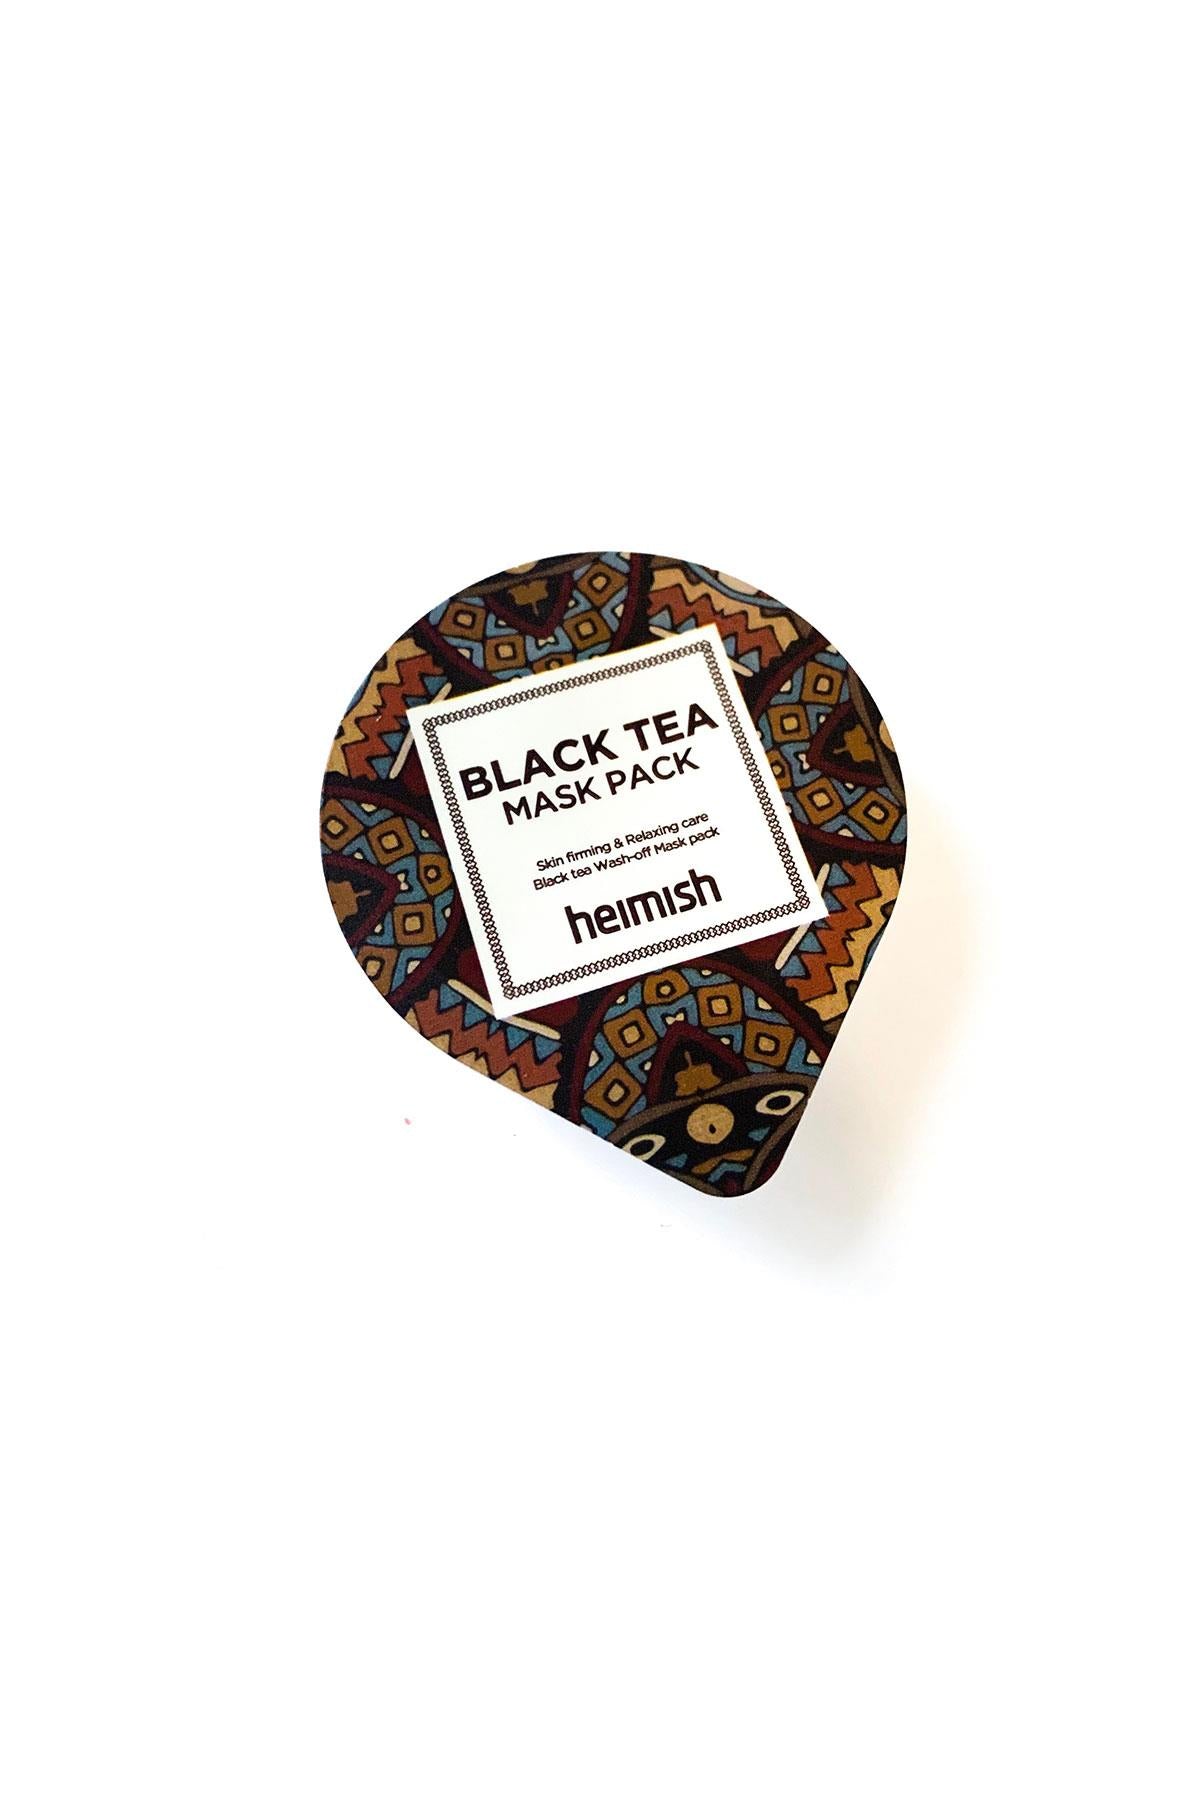 Heimish Black Tea Mask Pack Mini - Siyah Çay Yüz Maskesi Blister